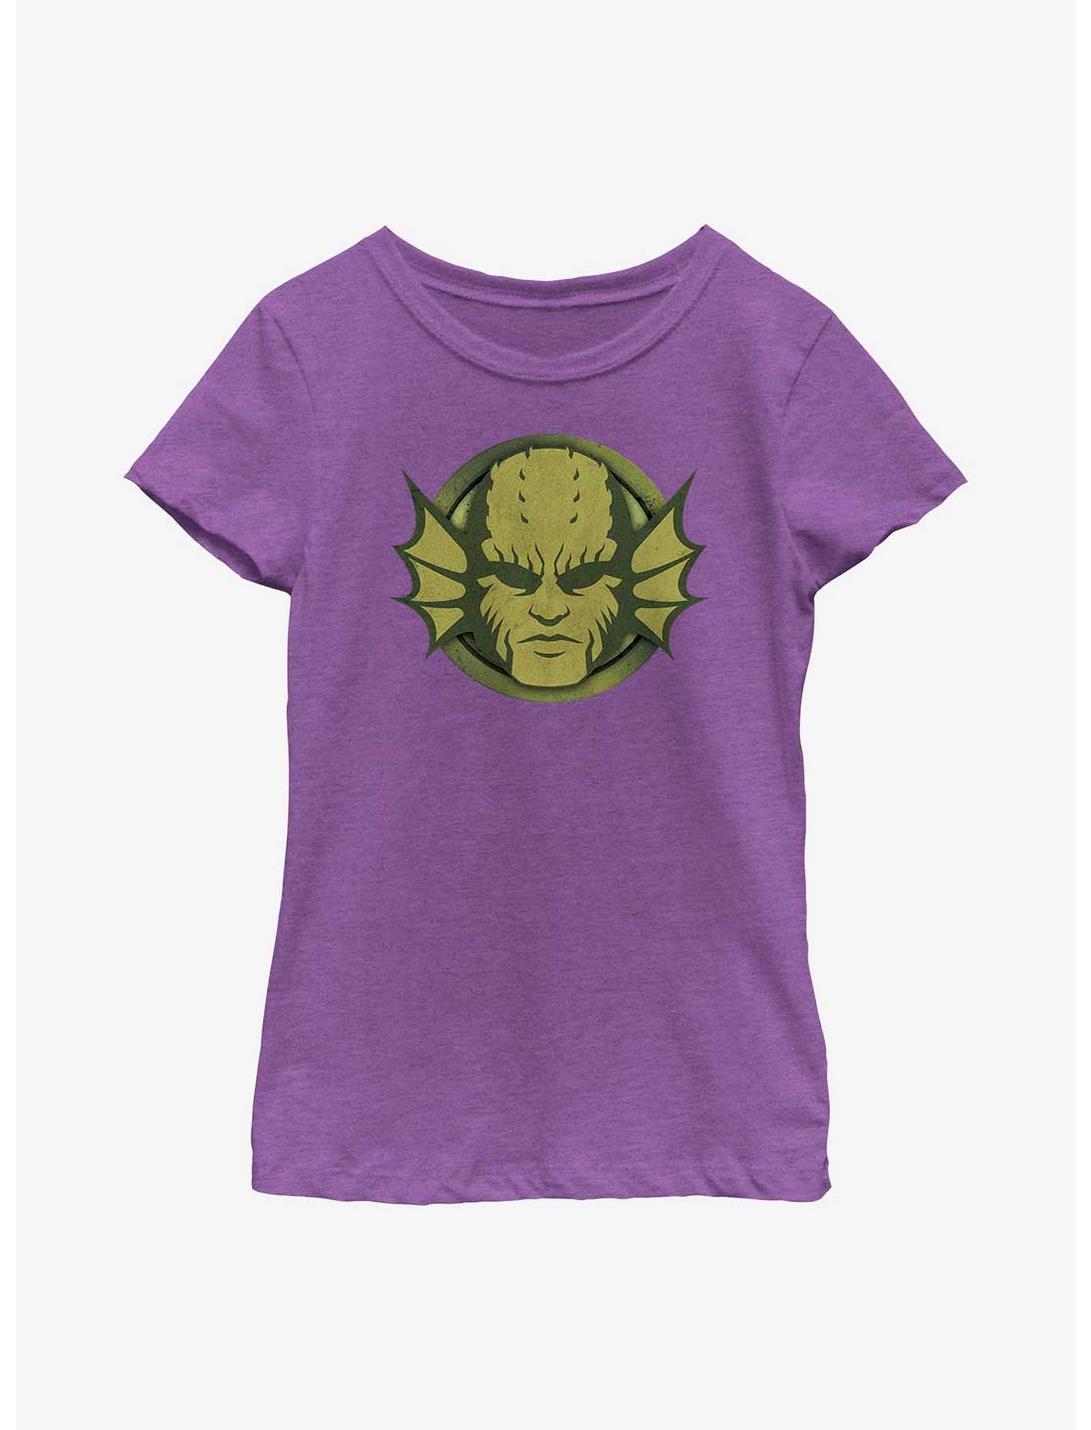 Marvel She-Hulk Abomination Portrait Youth Girls T-Shirt, PURPLE BERRY, hi-res